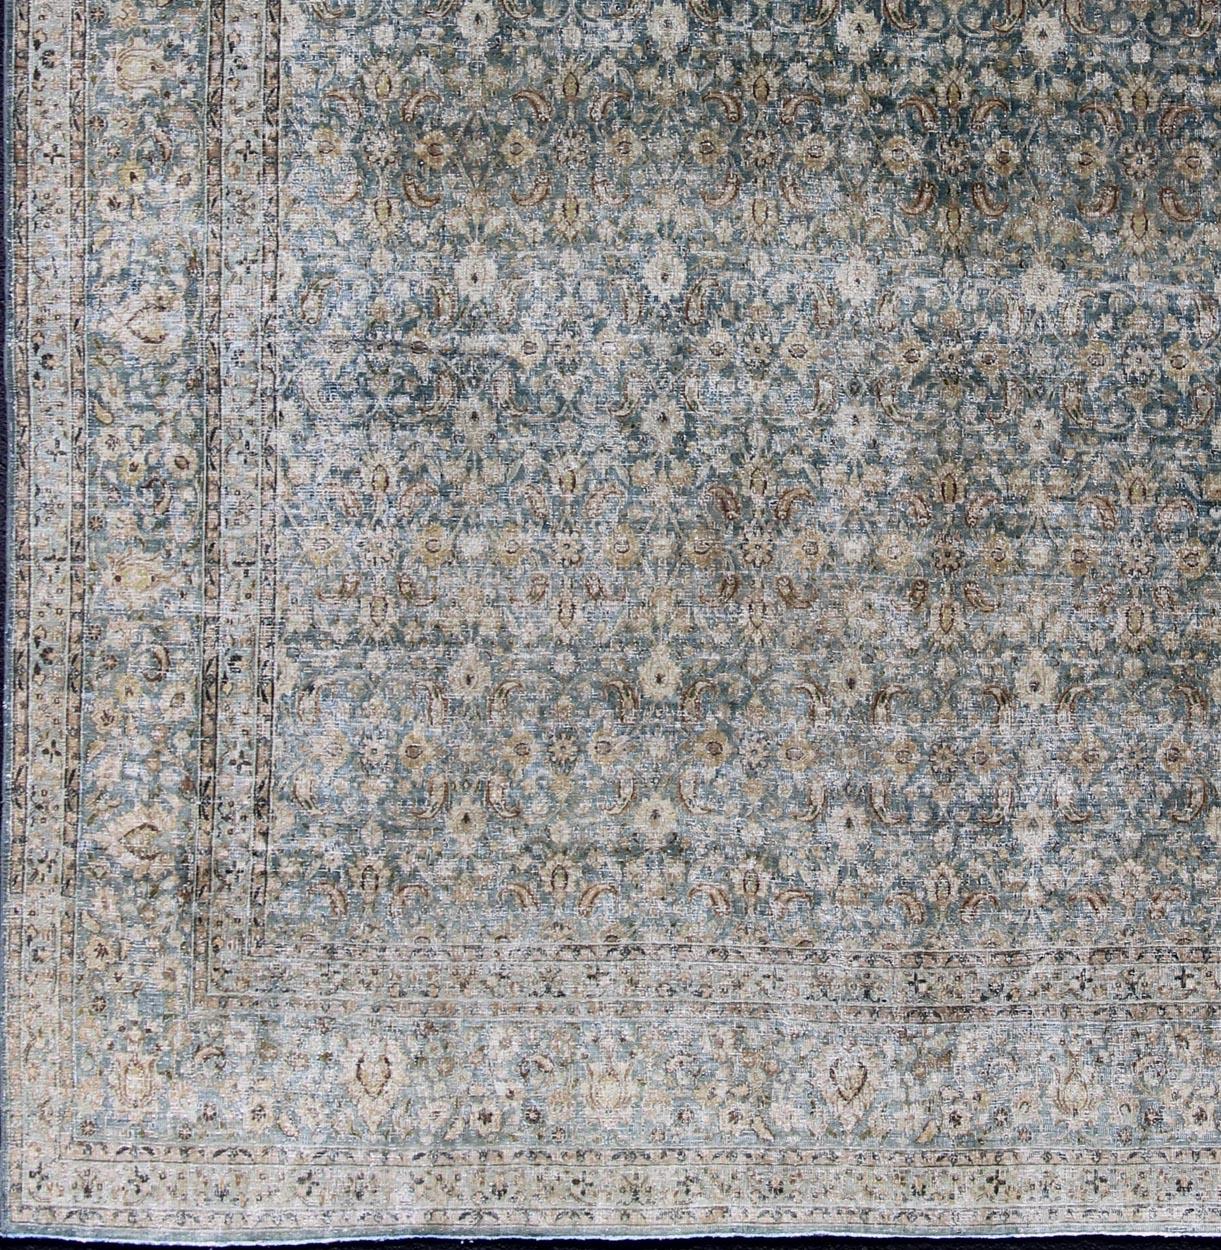 Blue, brown, cream, light green, Gray, light blue, taupe, tan and brown geometric Persian Khorasan rug. Keivan Woven Arts /  rug en-179390, country of origin / type: Iran / Khorasan, circa 1920

Measures: 9'5 x 12'10.

This antique Khorasan carpet